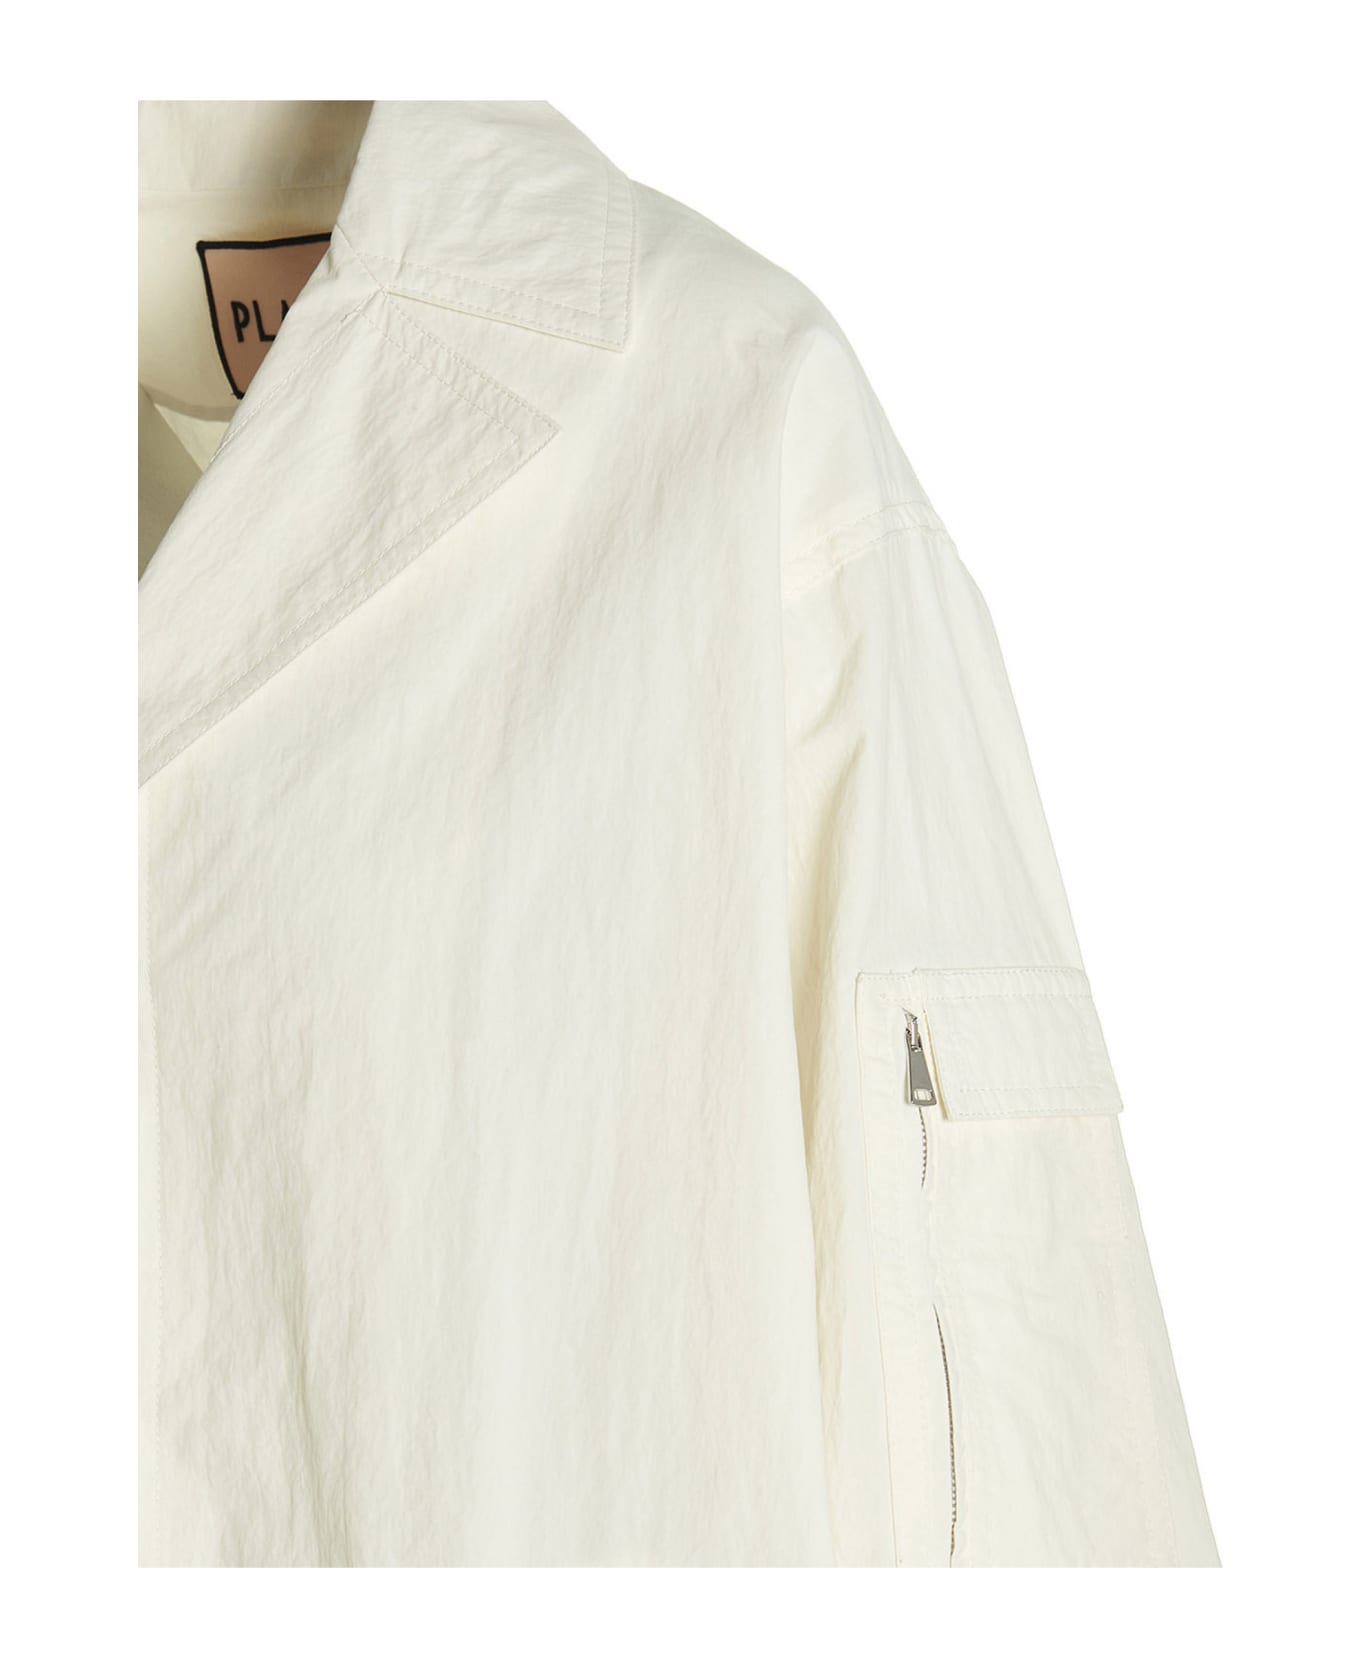 Plan C Technical Nylon Waterproof Jacket - White コート